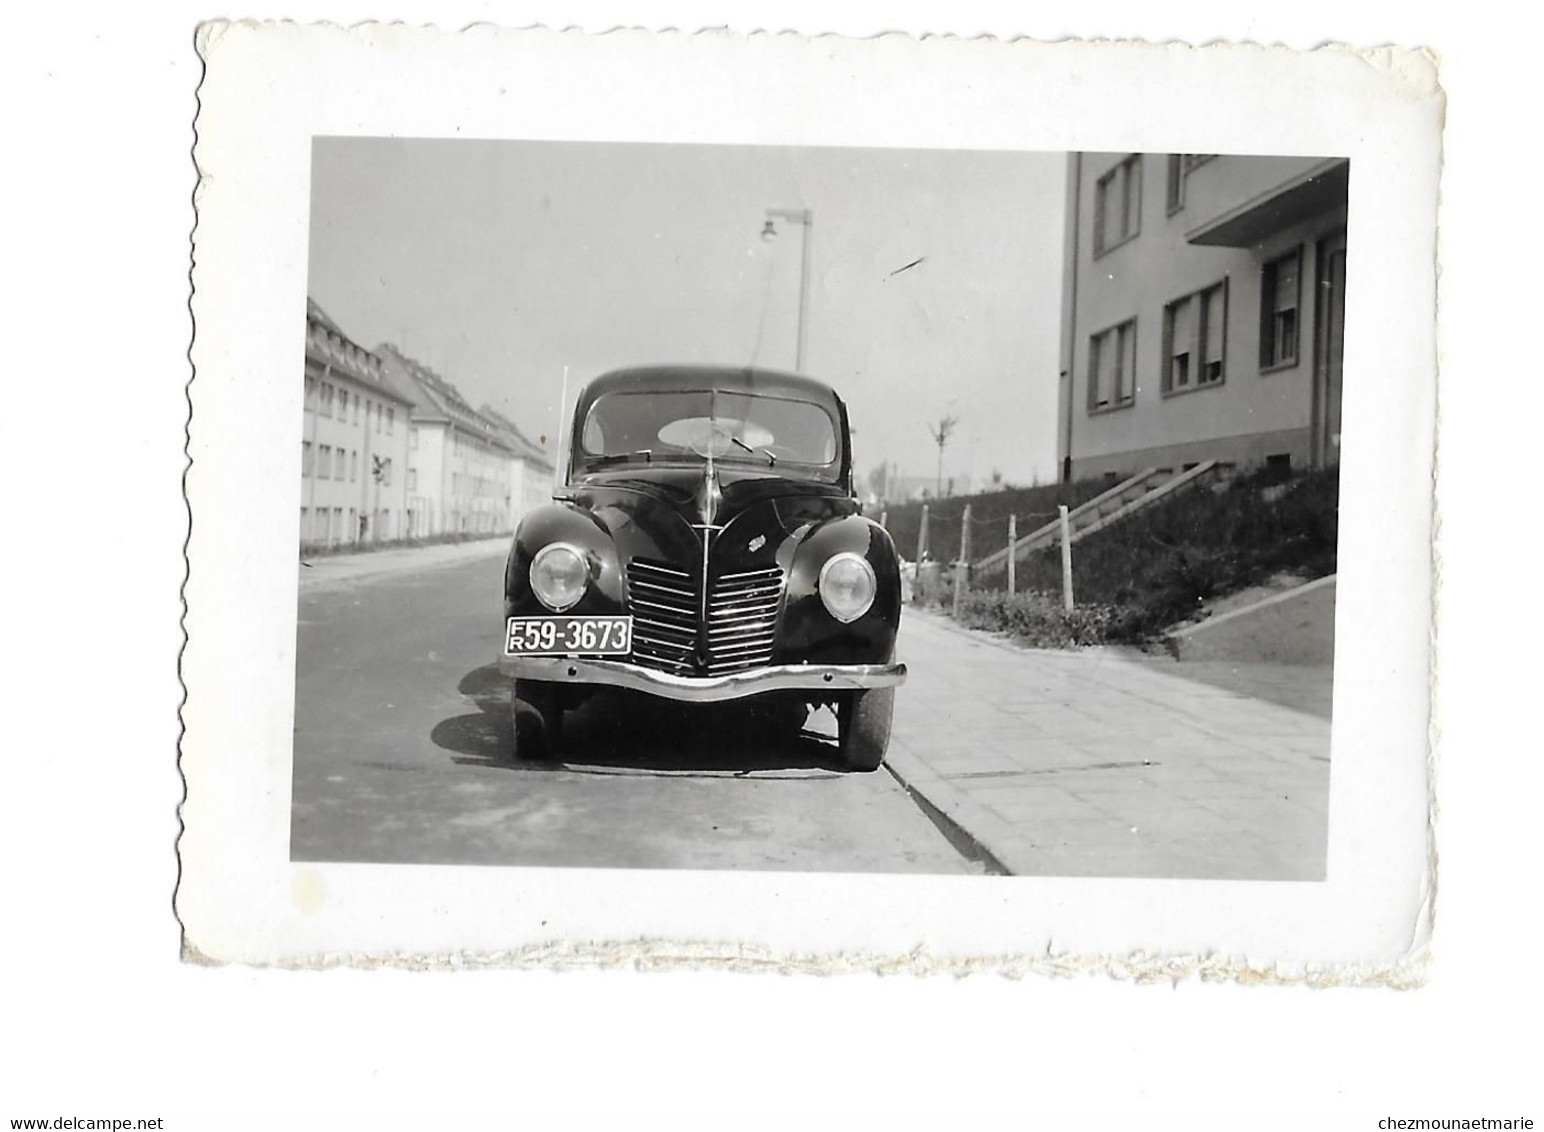 1953 AUTO FORD? IMMATRICULEE NORD 59-3673 - PHOTO 9.5*7 CM - FAURT-MURET? - Auto's